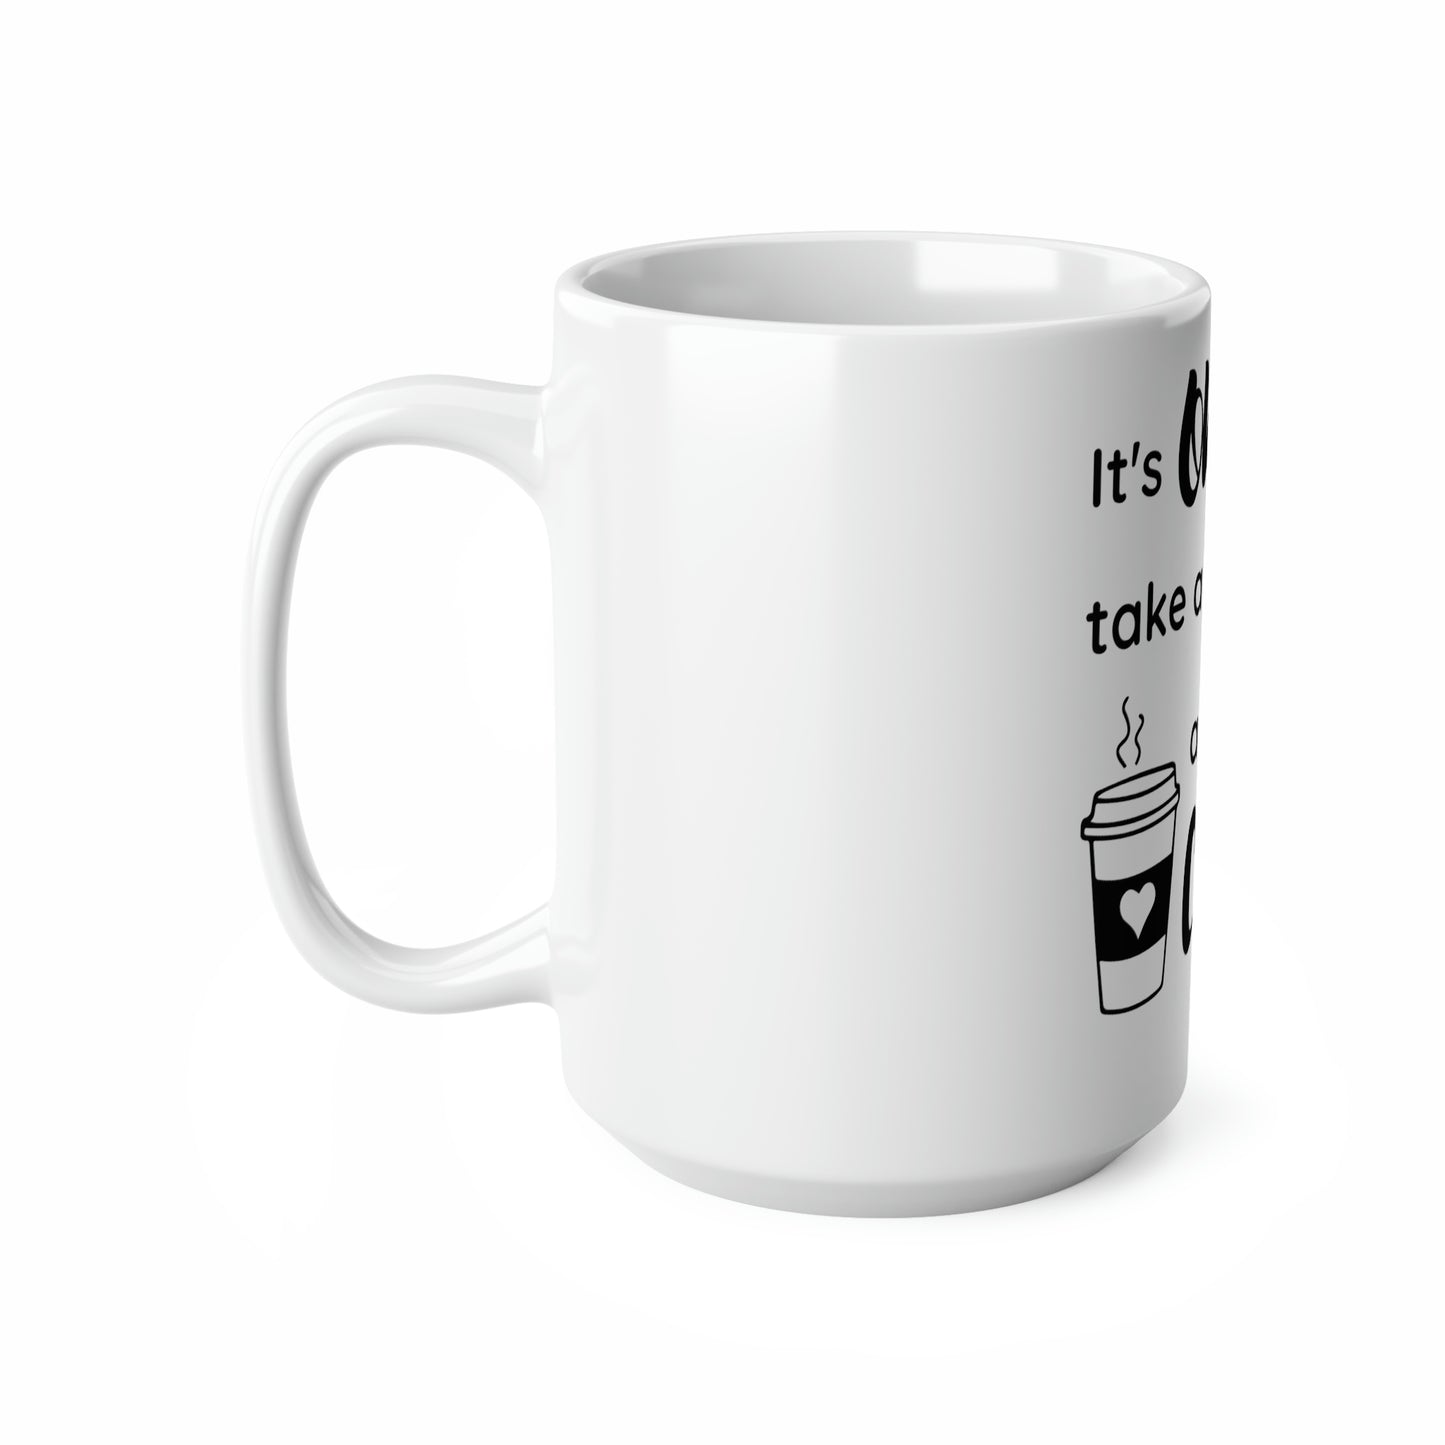 Its ok to take a coffee break Ceramic Coffee Cups, 11oz, 15oz gift funny humor hot drink need work drink mug cute tea small personalized